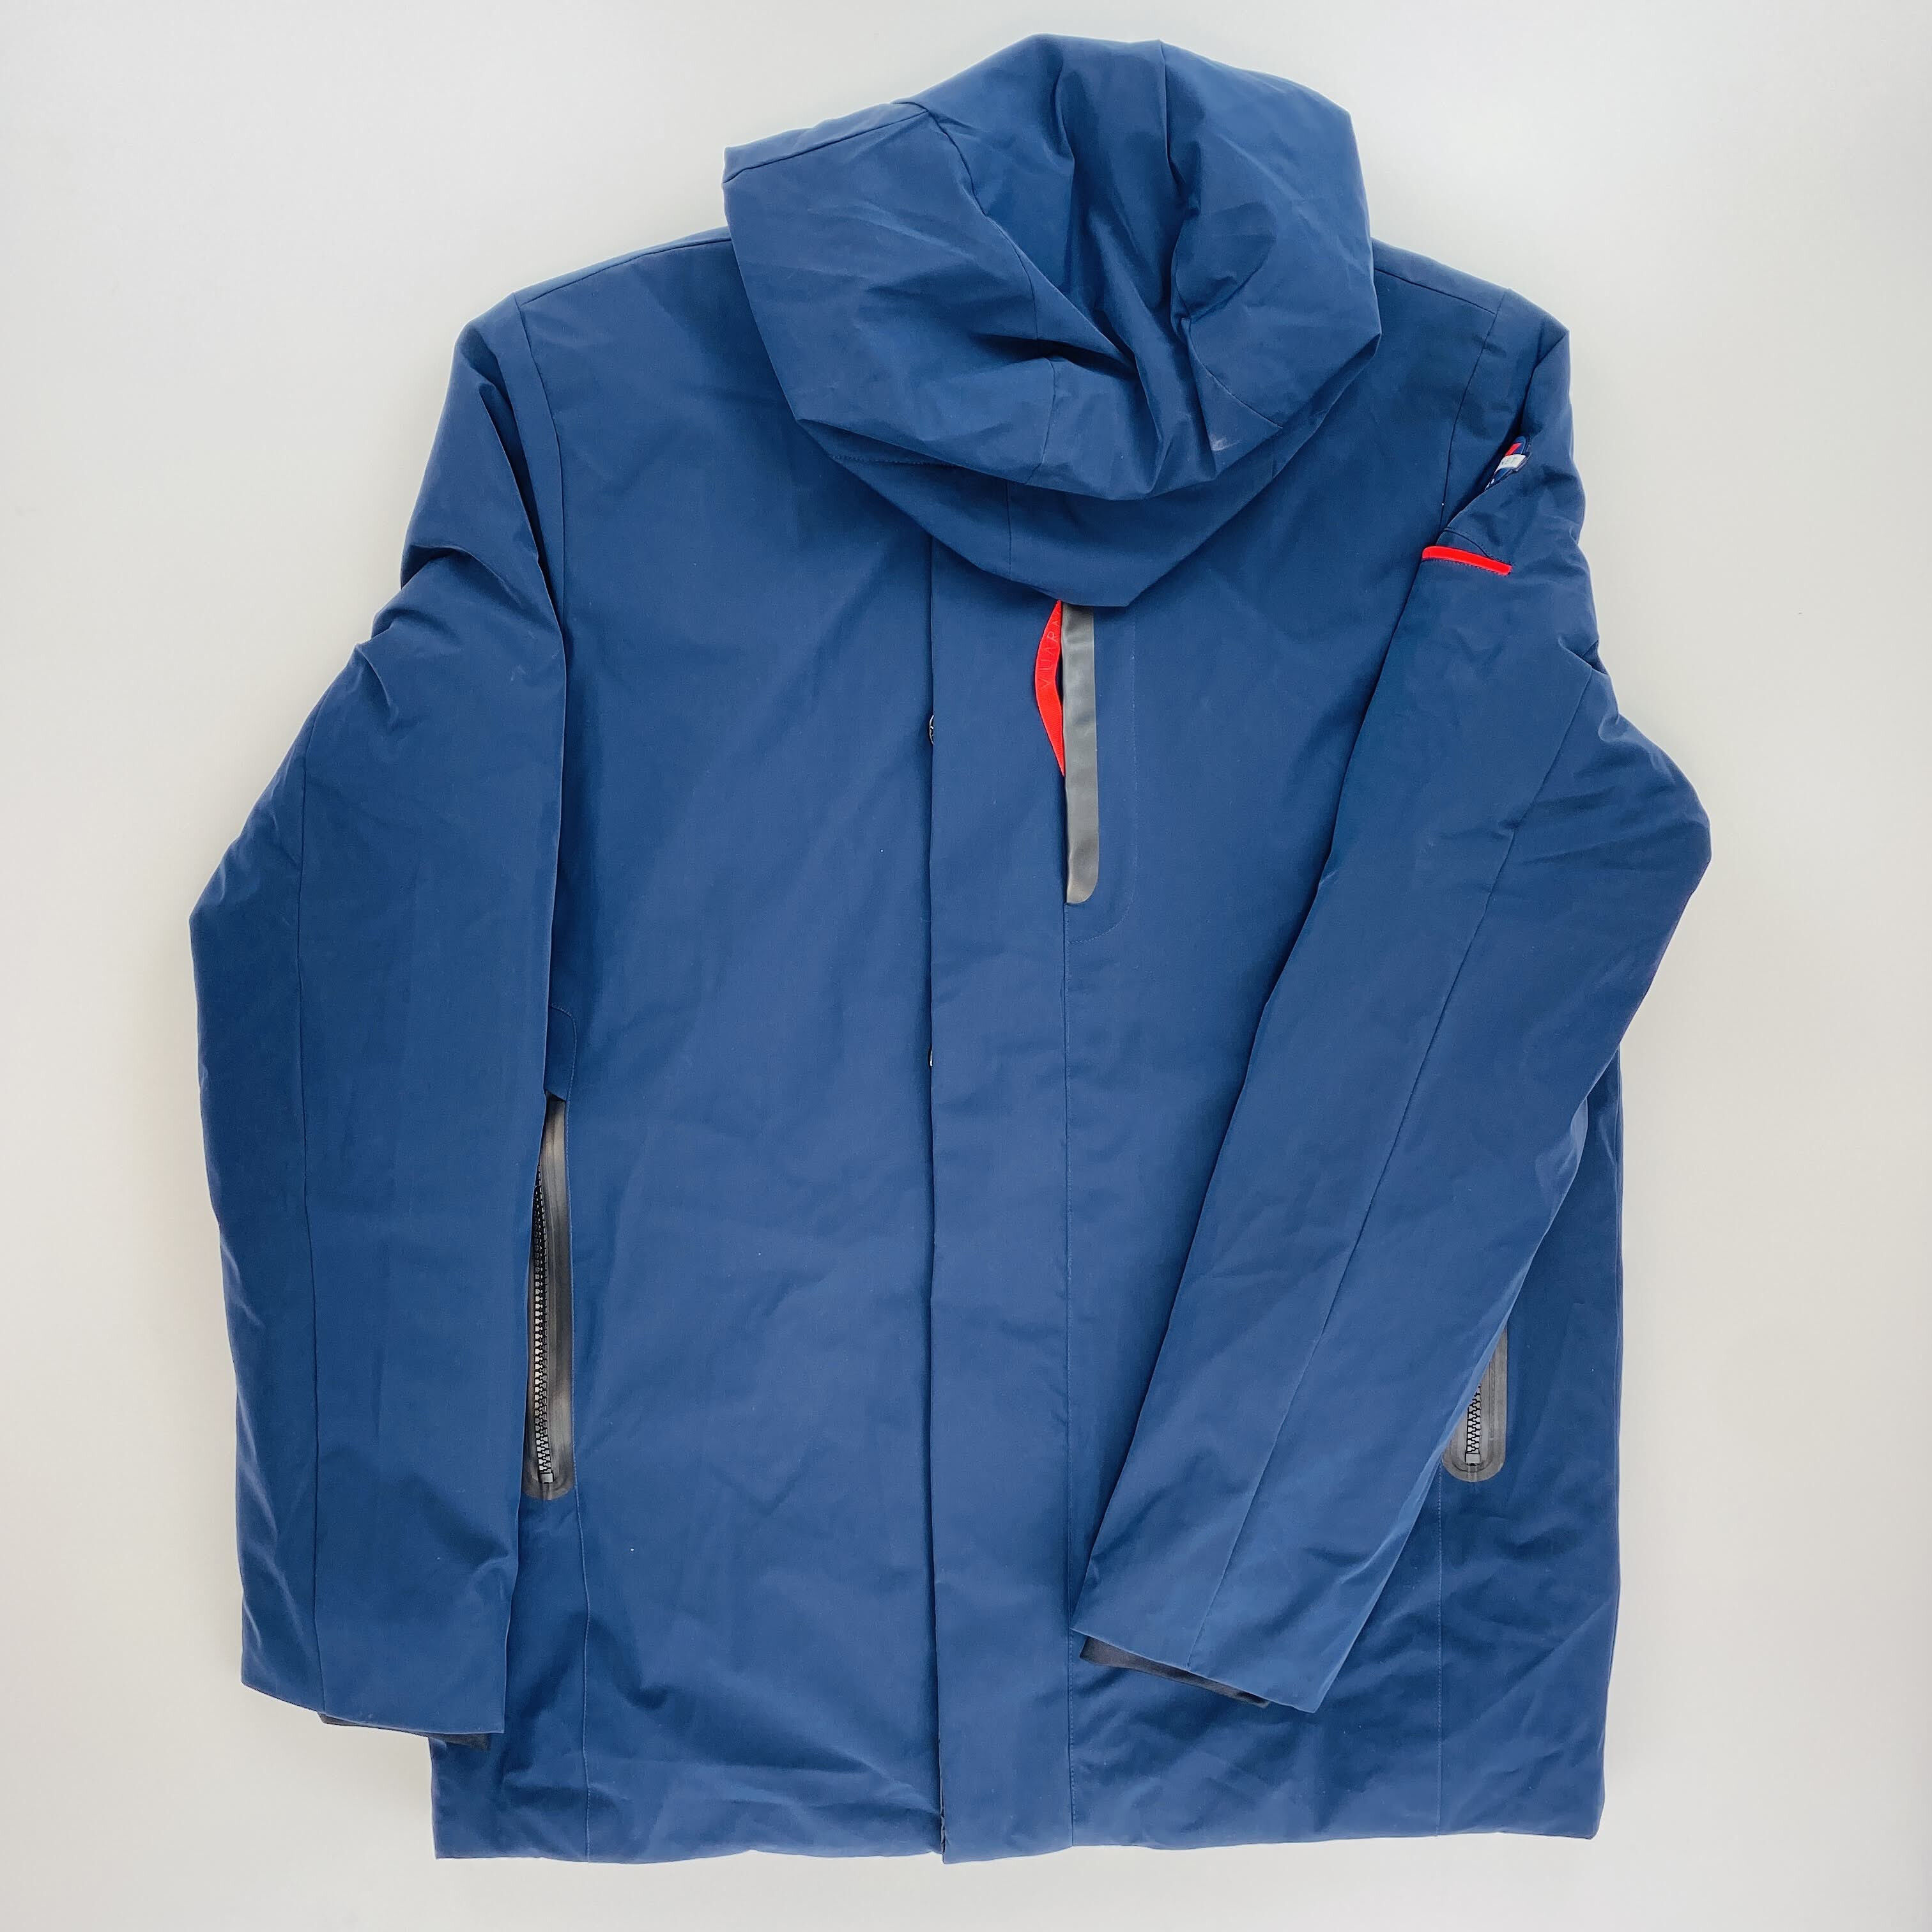 Vuarnet Orta Jacket - Giacca di seconda mano - Uomo - Olio blu - L | Hardloop